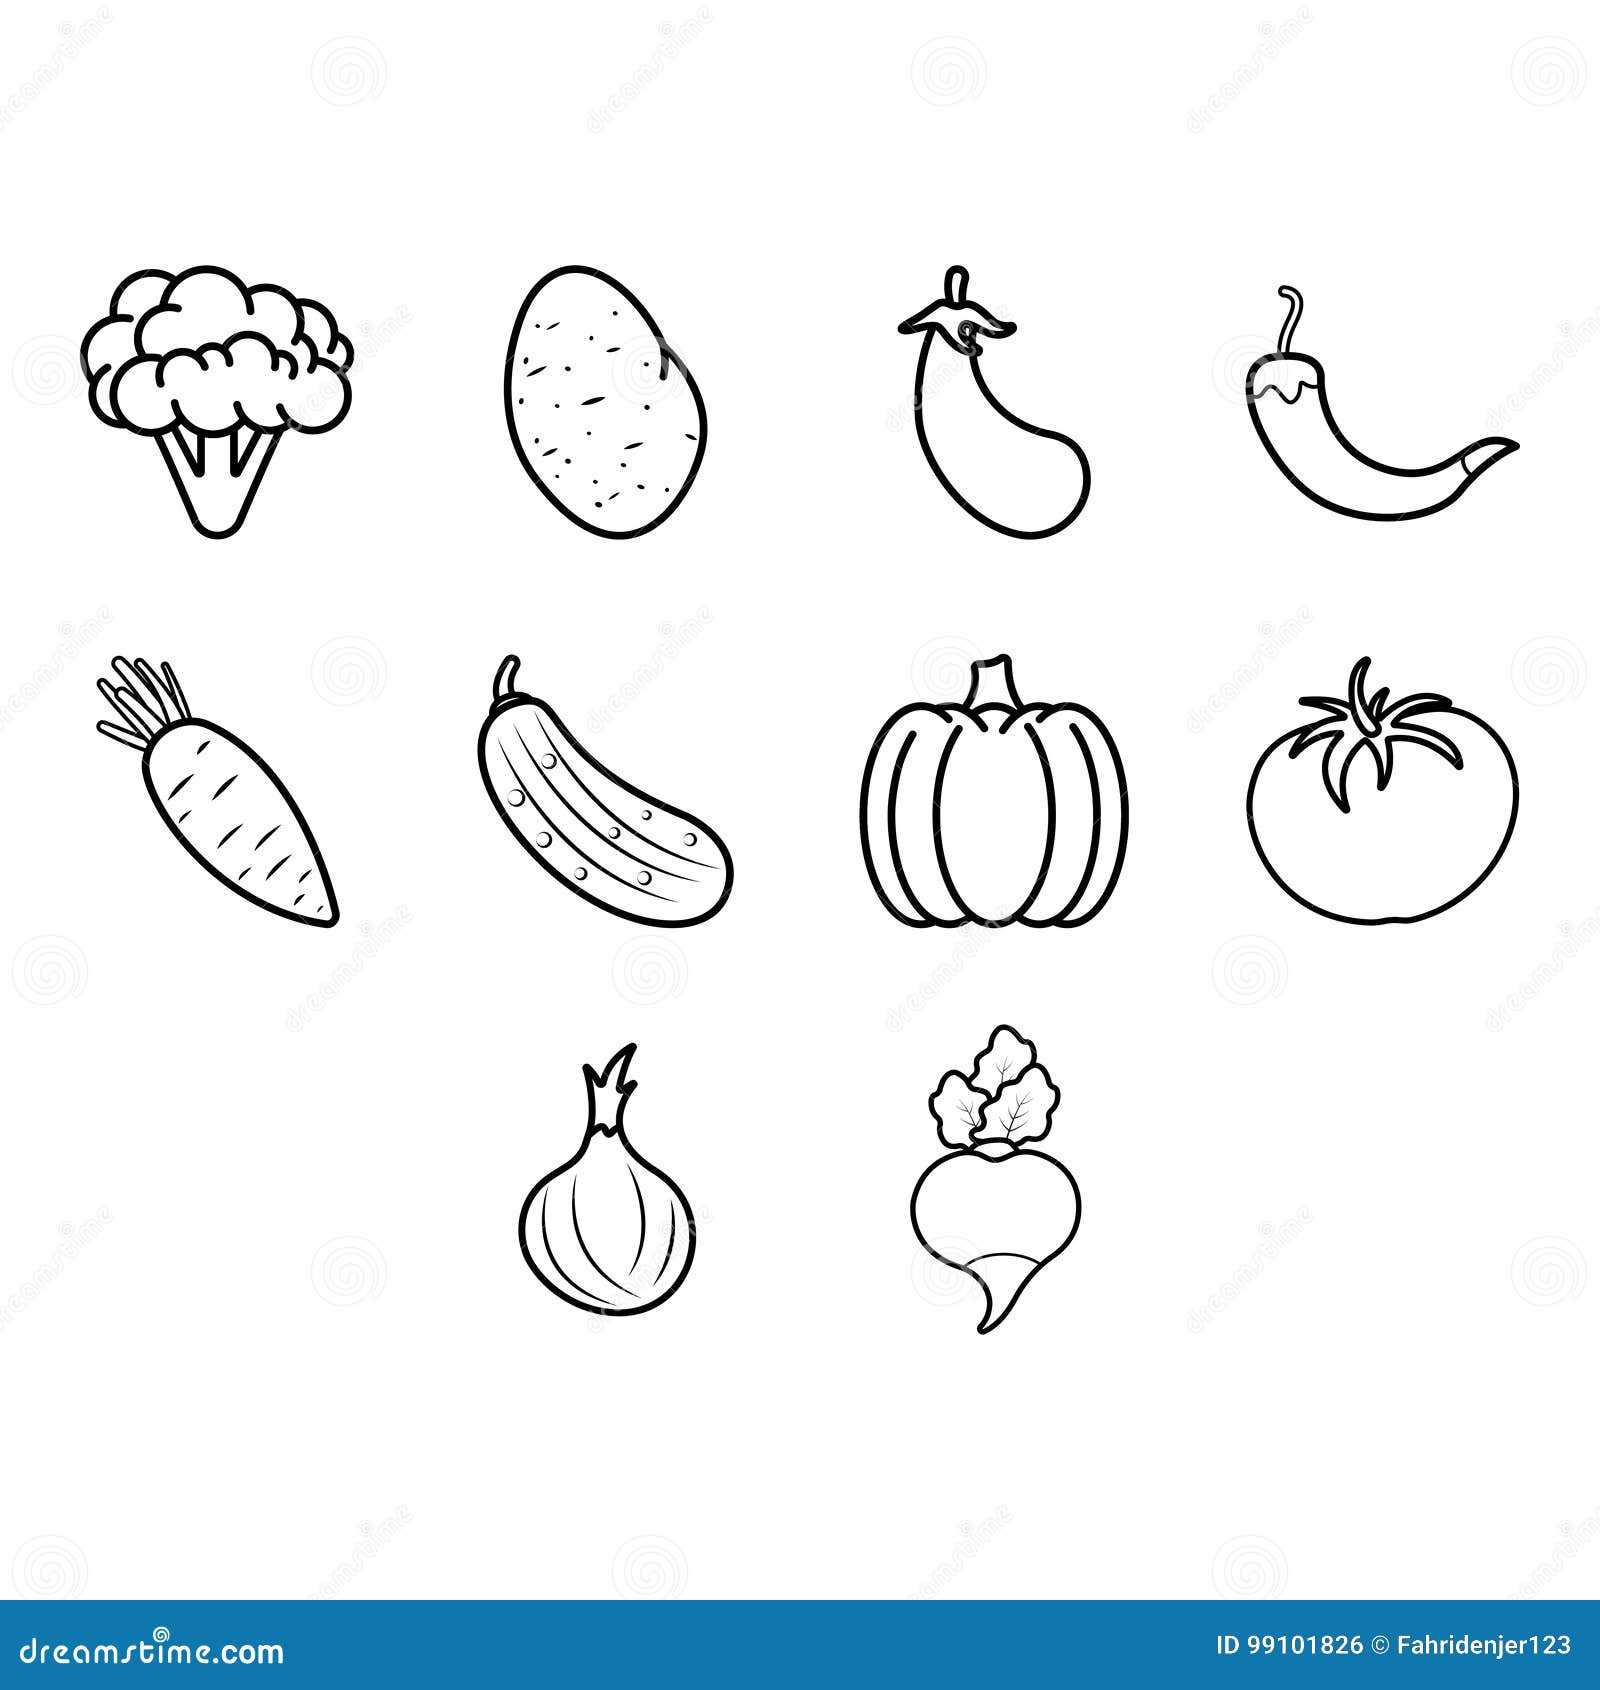 Vegetable icon stock illustration. Illustration of logo - 99101826